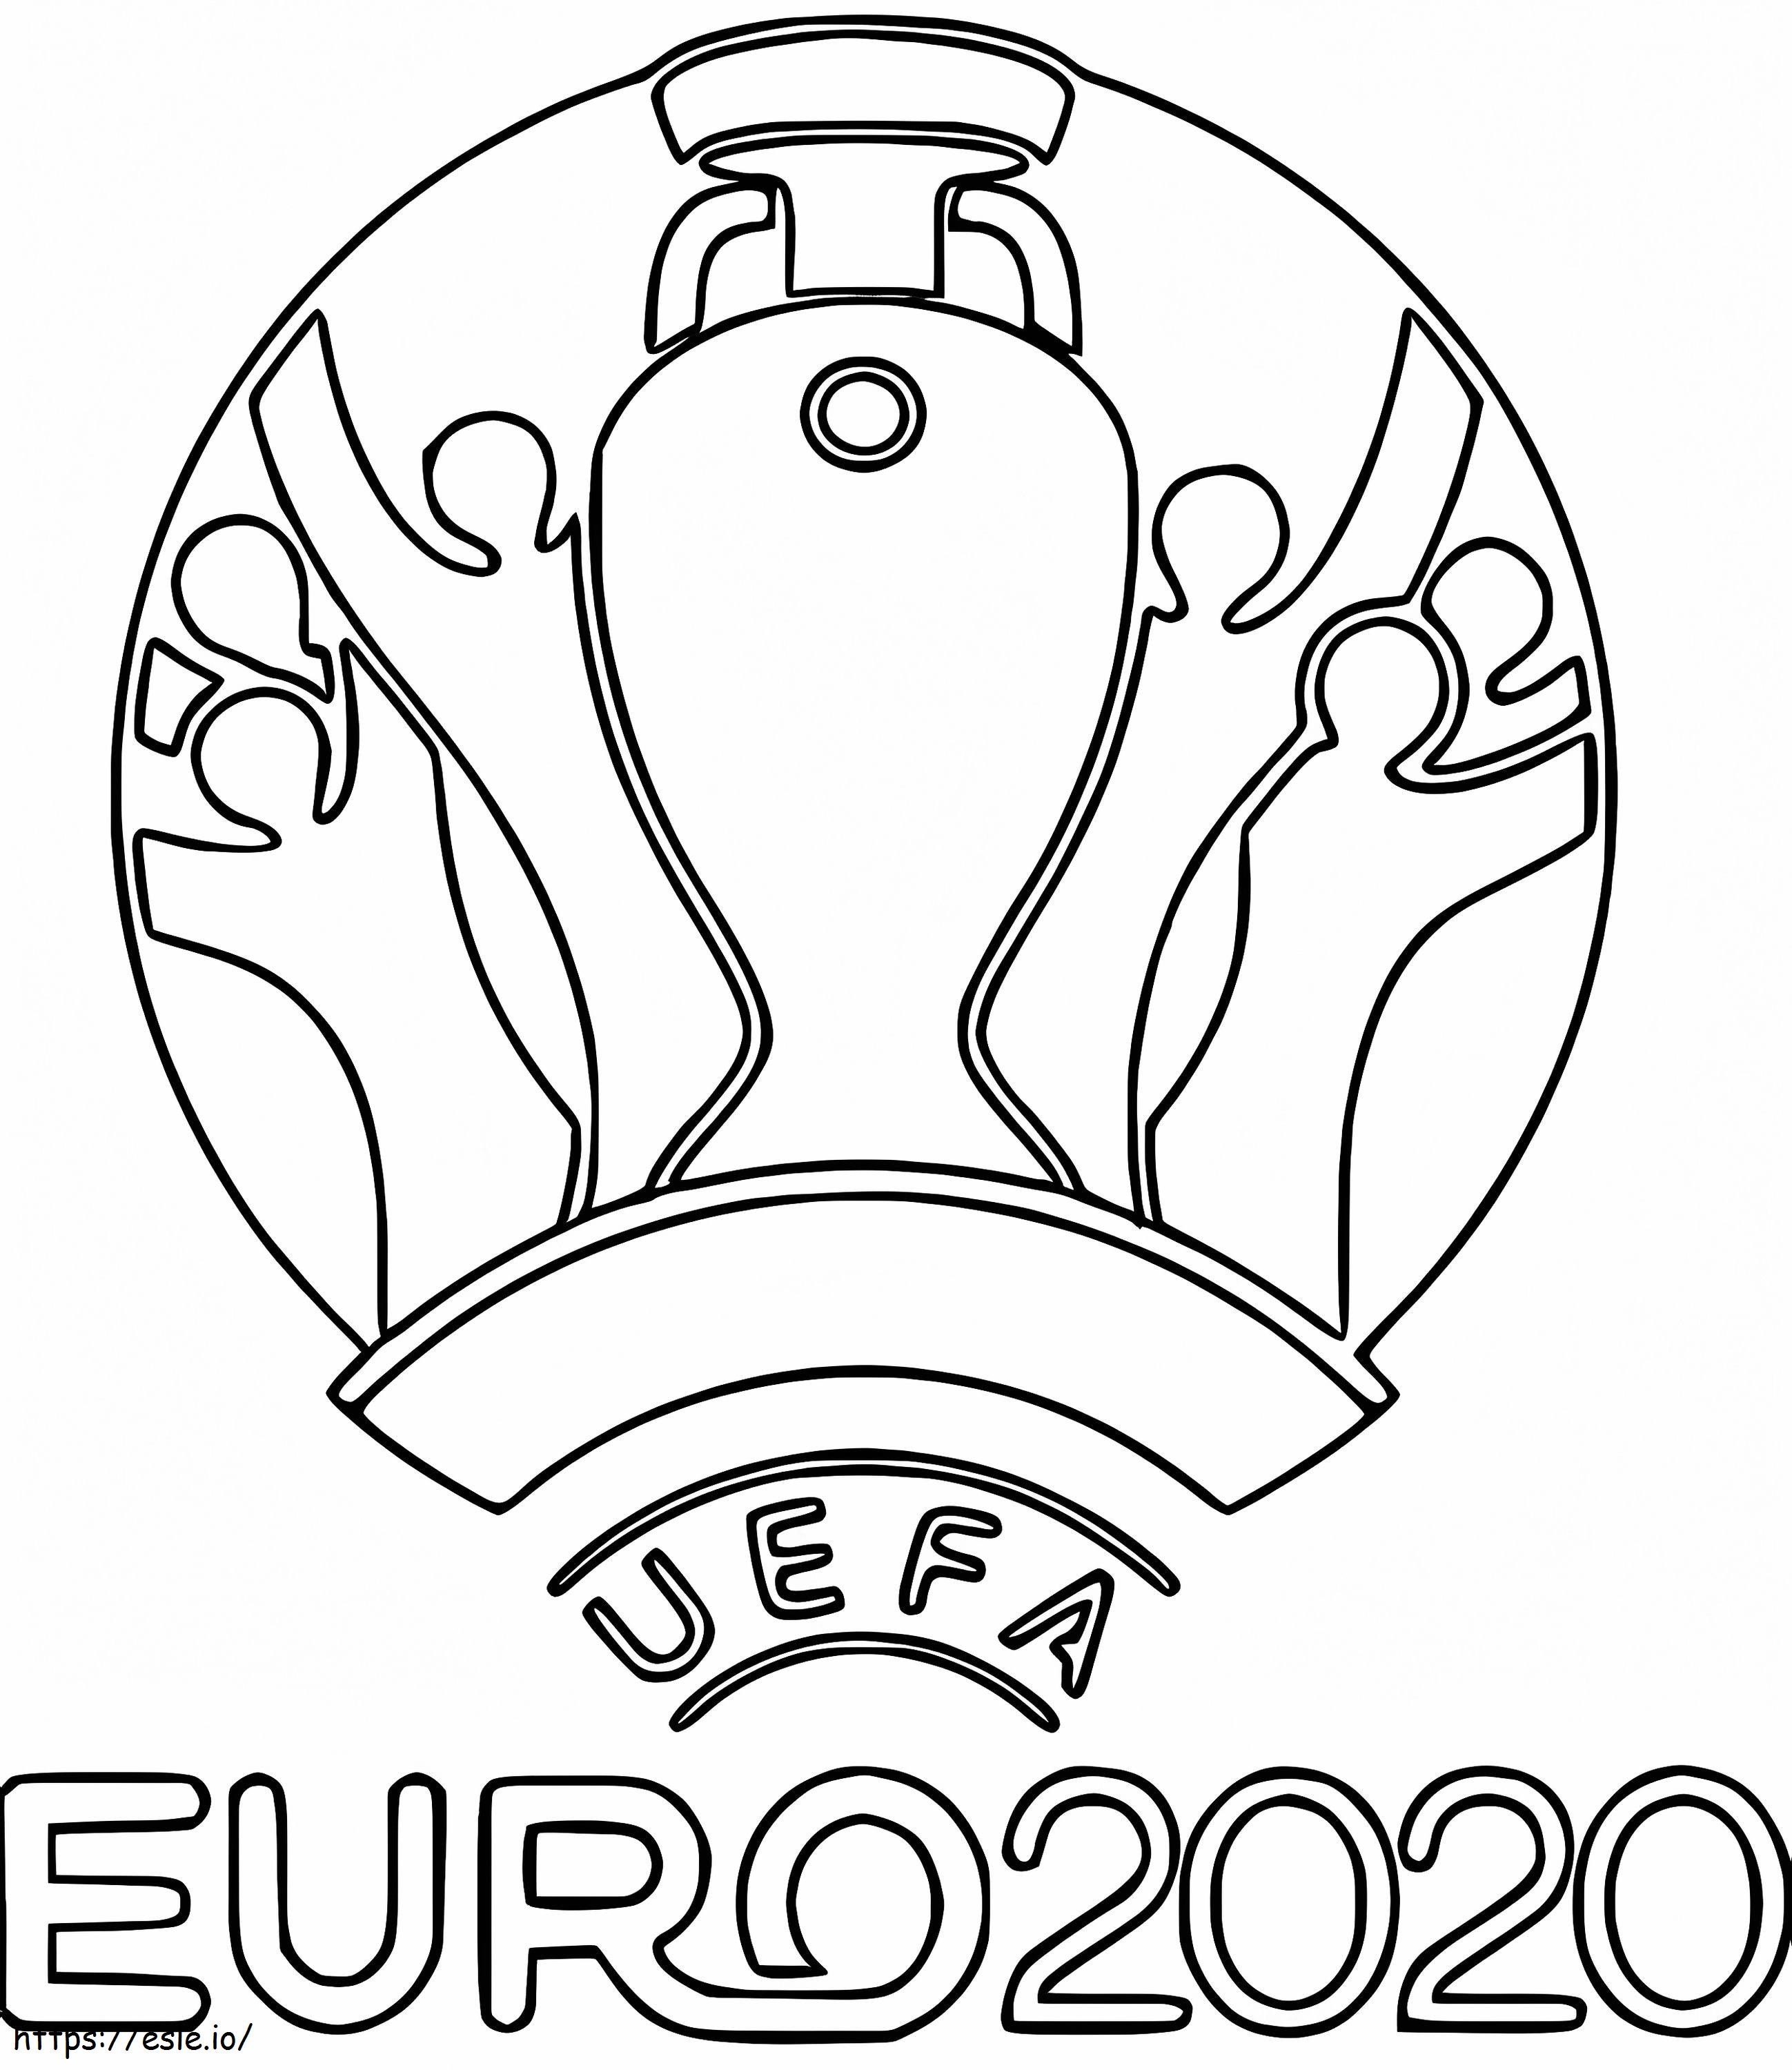 Euro 2020 2021 boyama